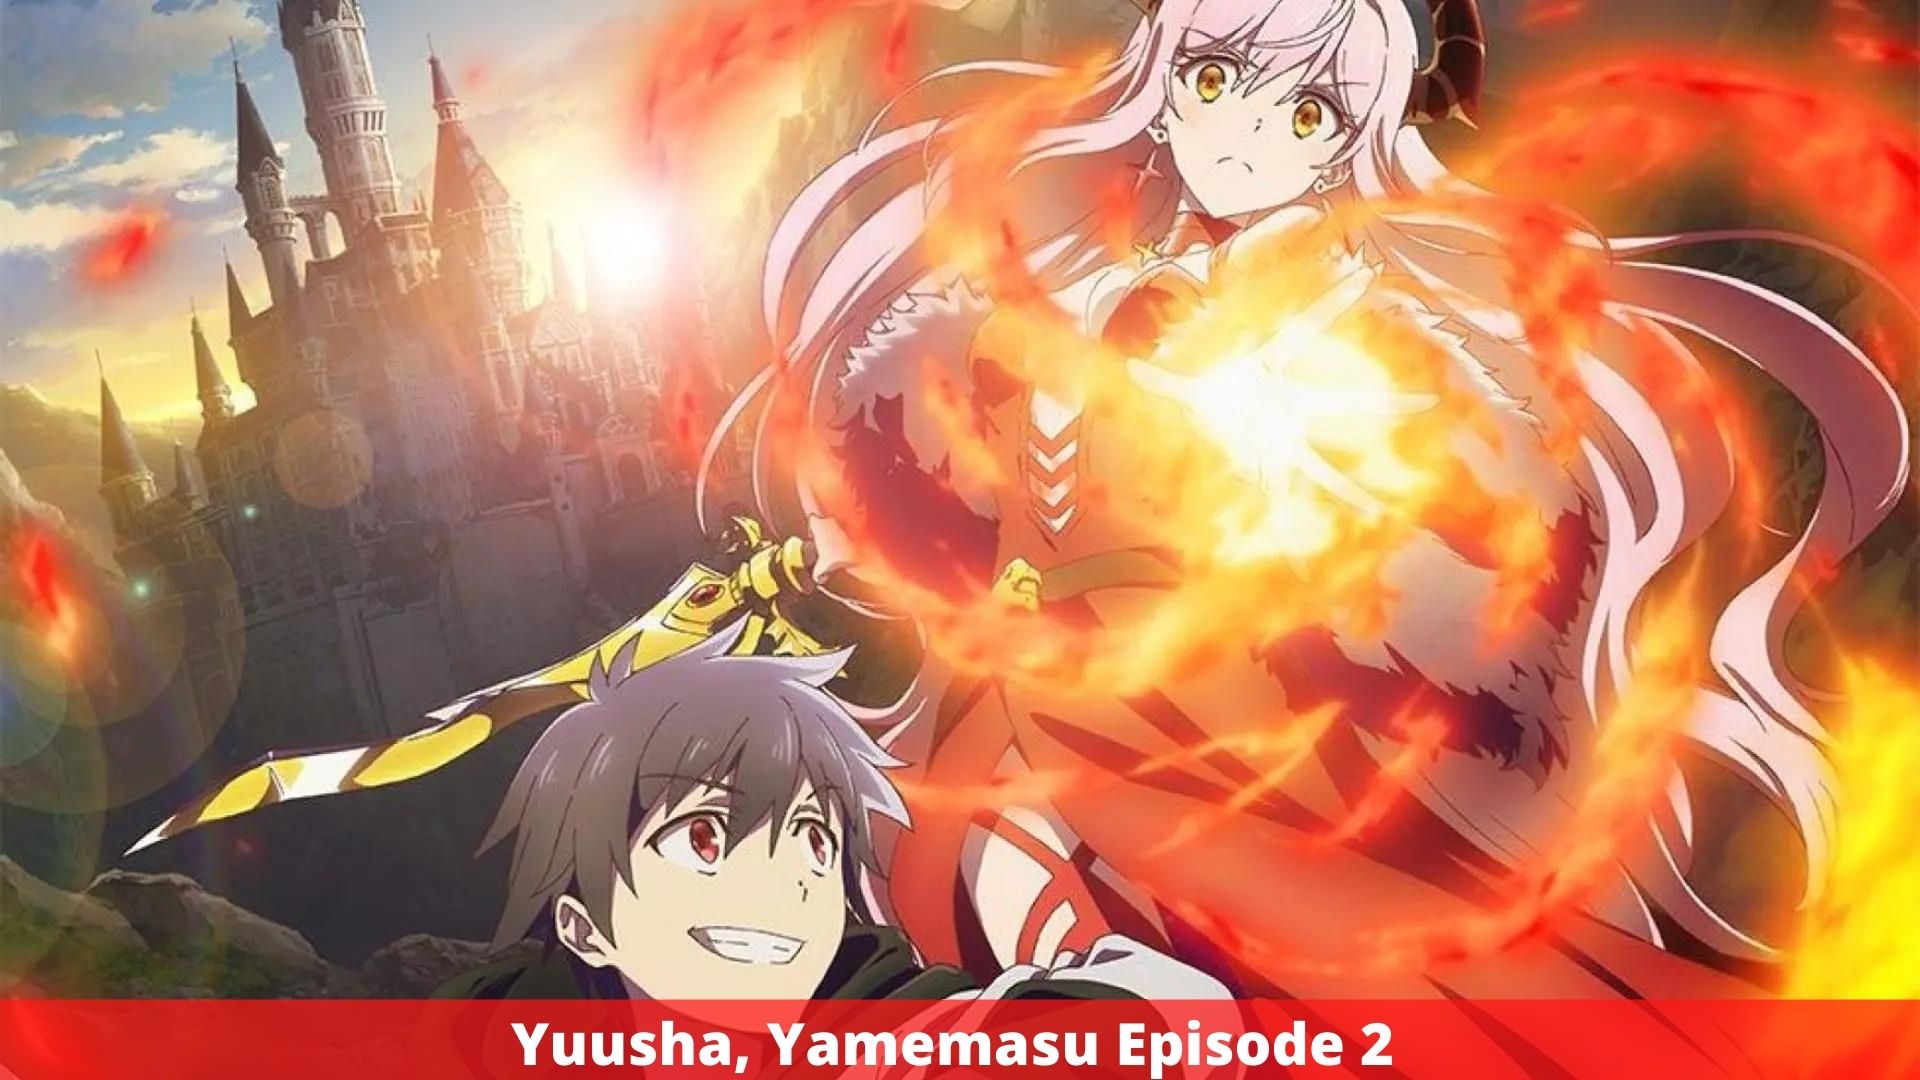 Yuusha yamemasu crunchyroll - Top vector, png, psd files on